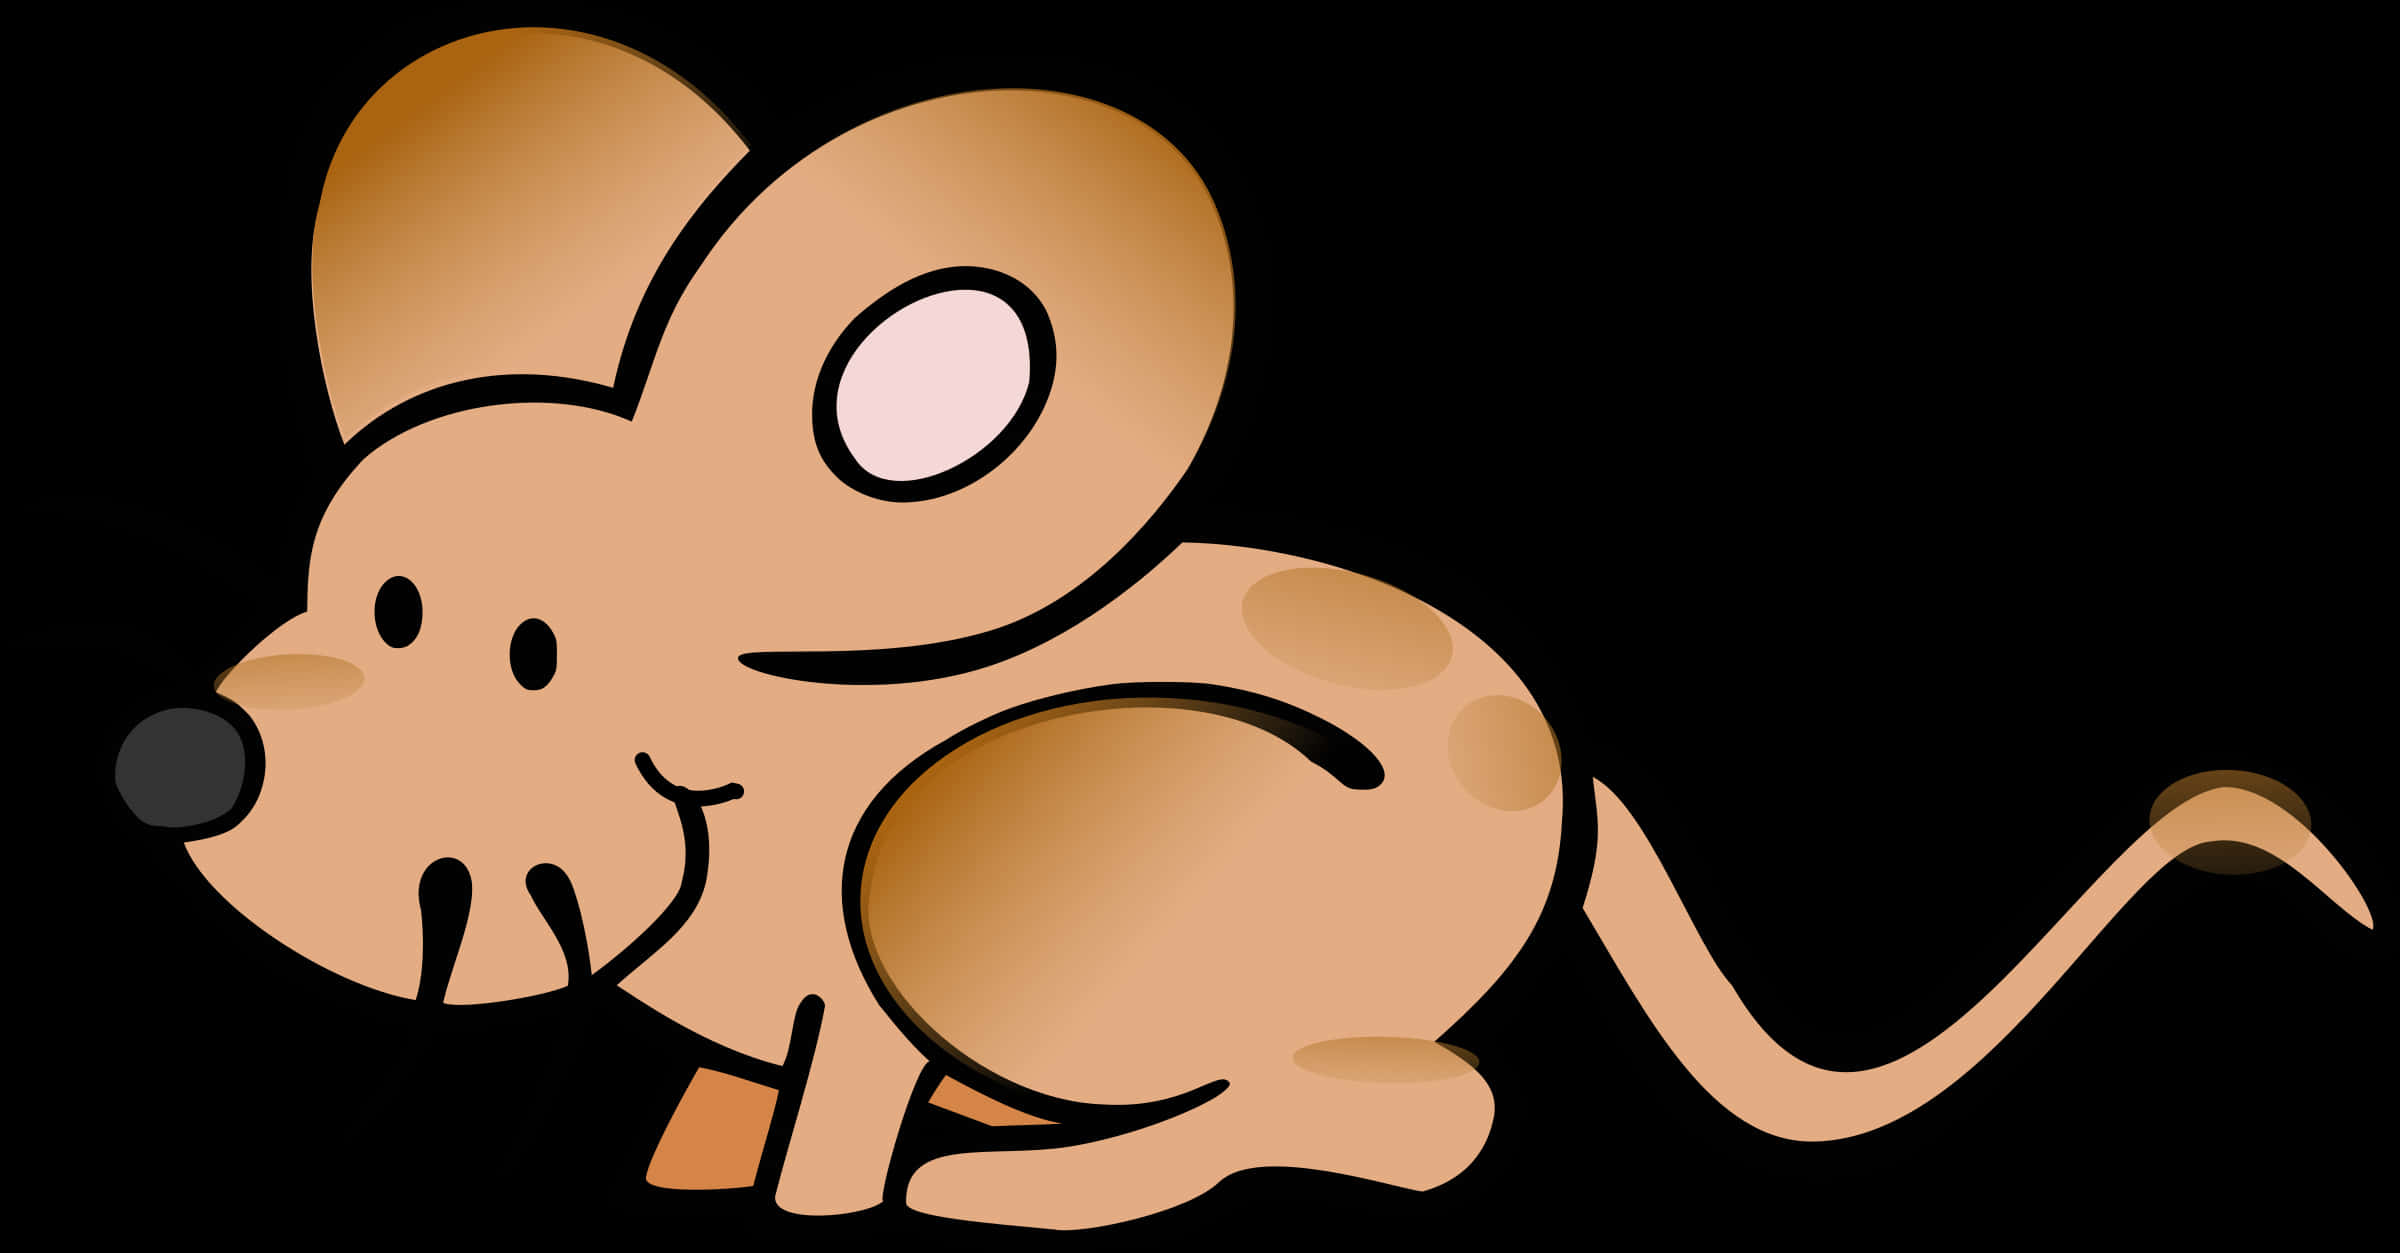 Cartoon Mouse Illustration